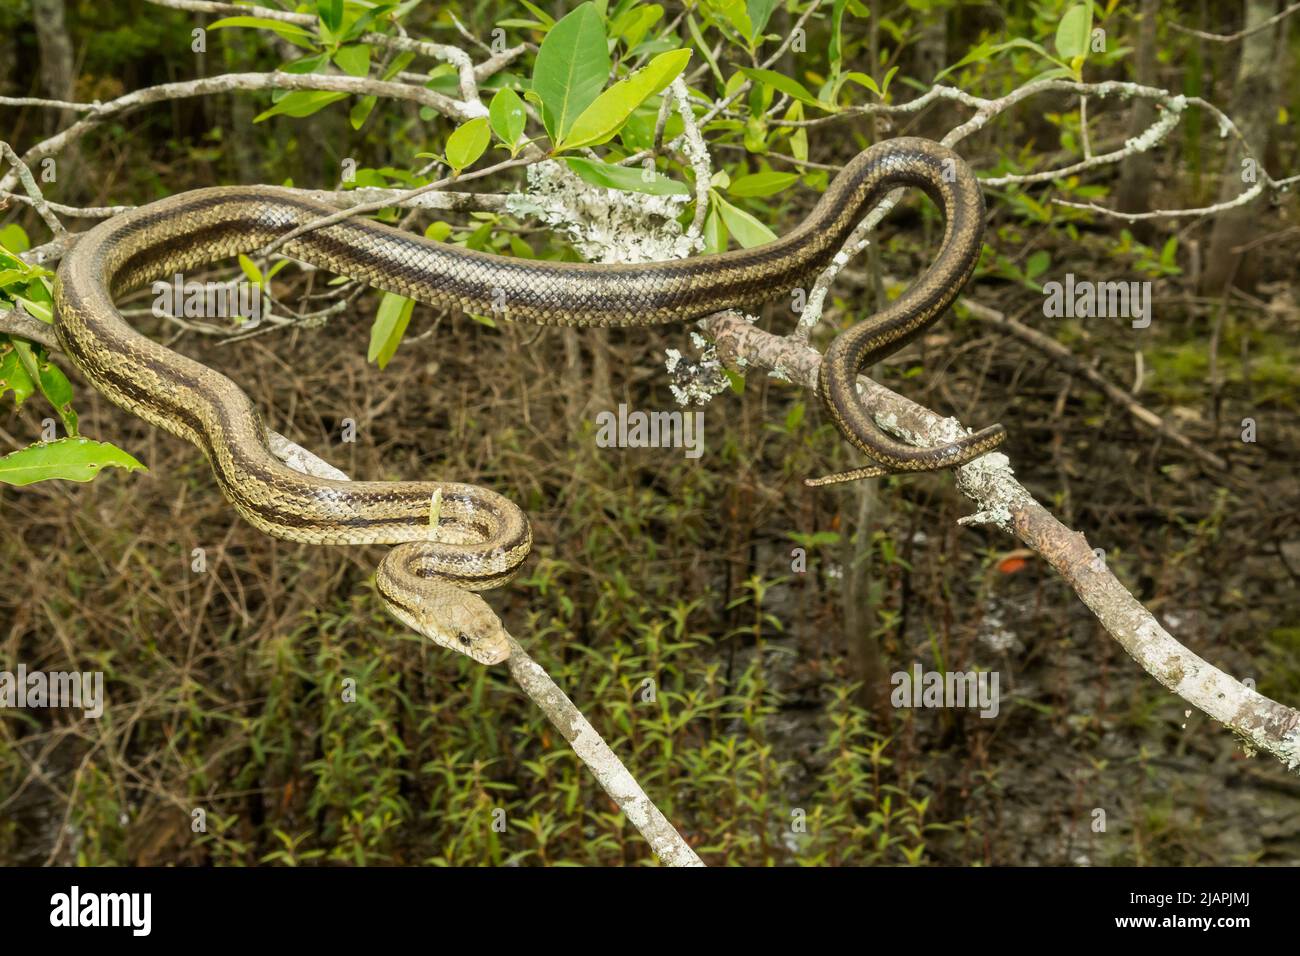 Serpiente de rata verdosa - Pantherophis alleghaniensis Foto de stock